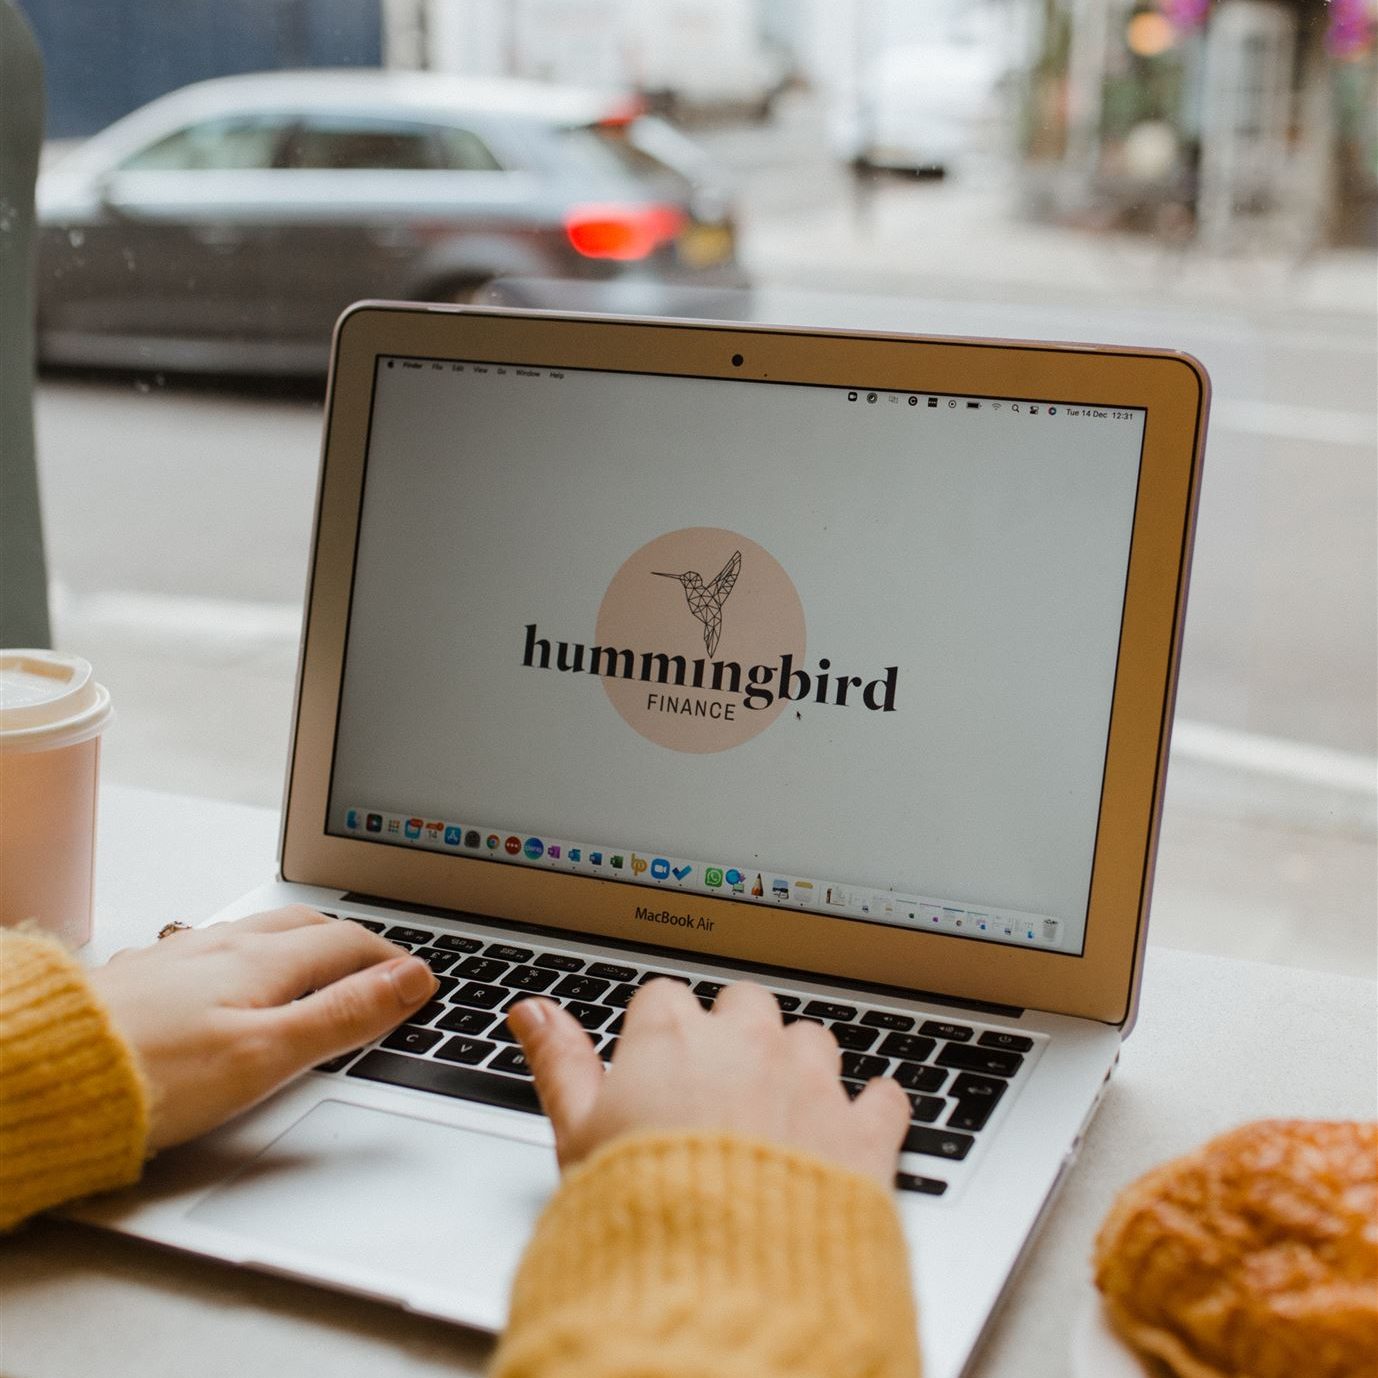 Hummingbird Finance